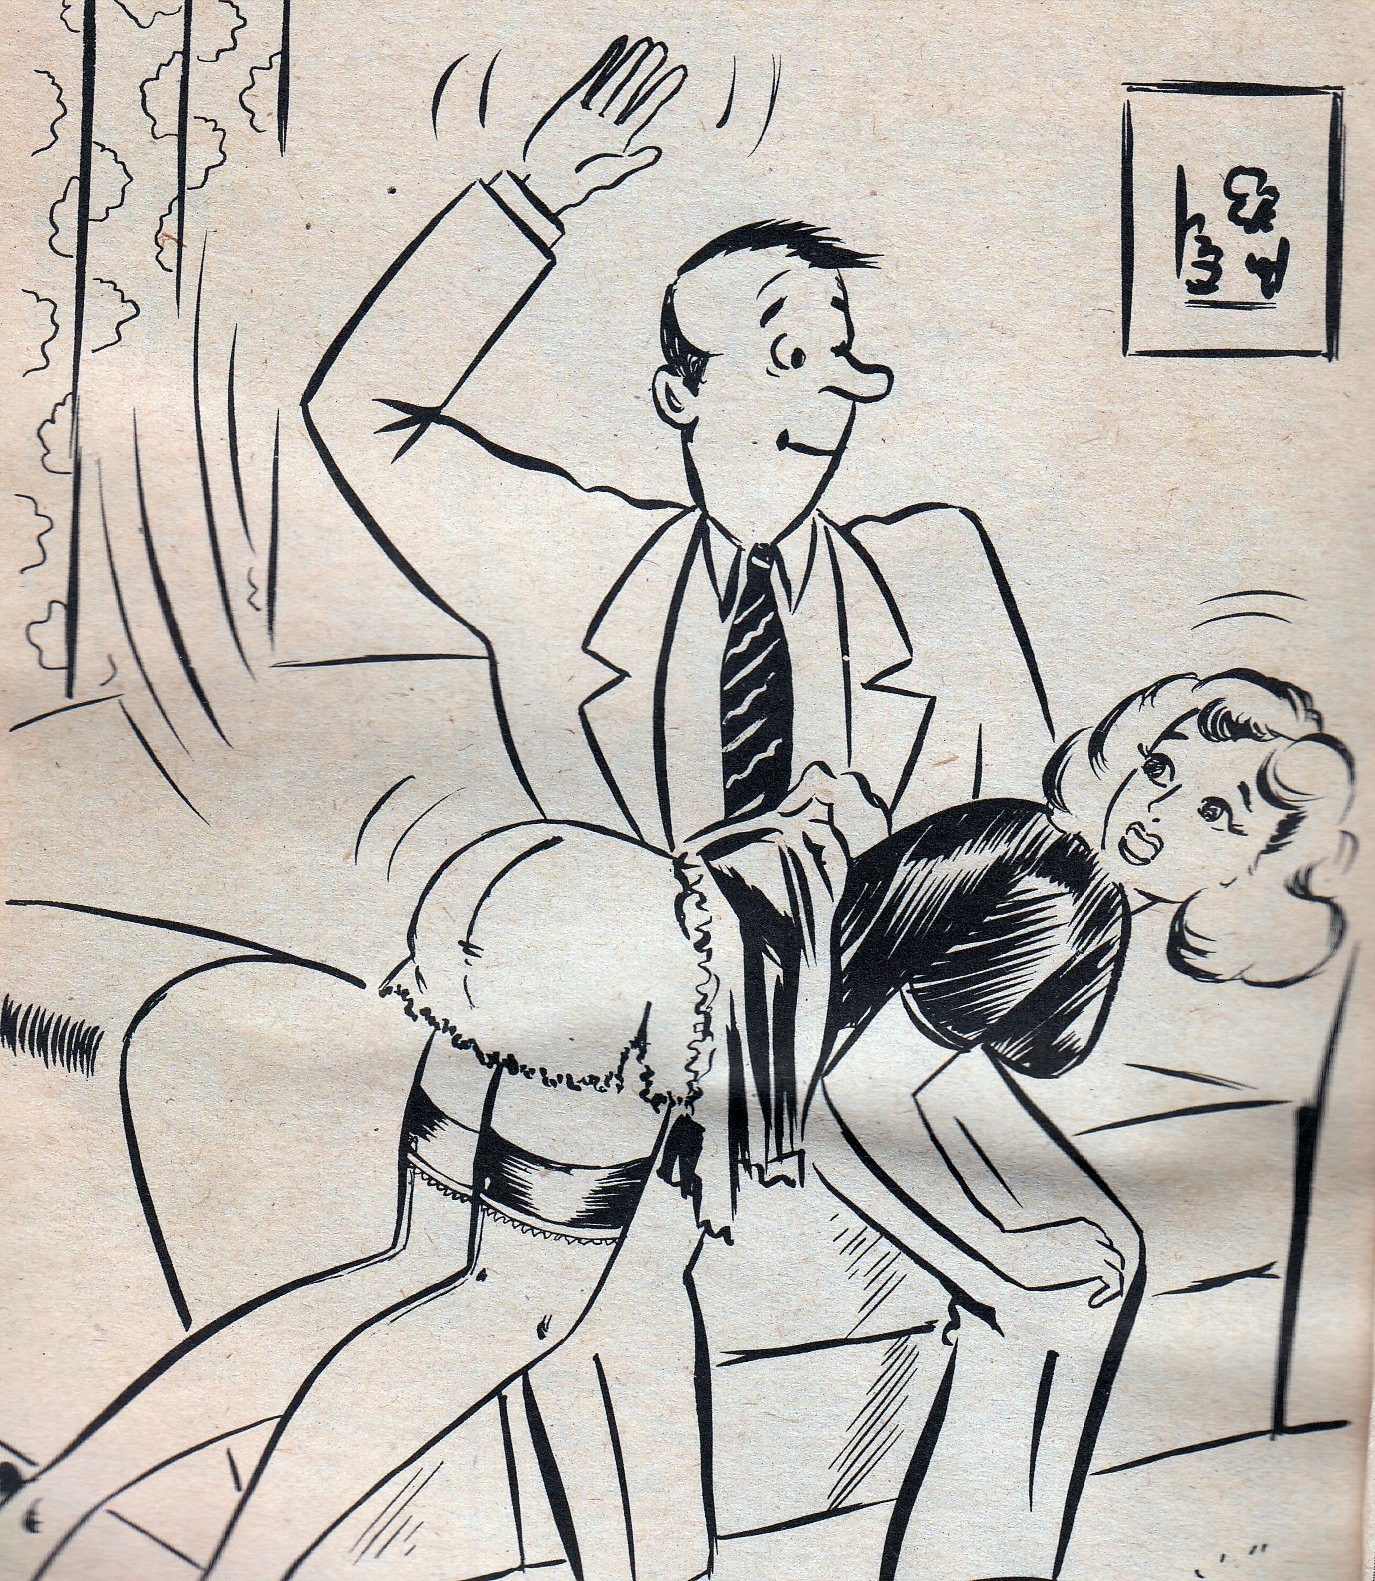 man spanks woman in living room